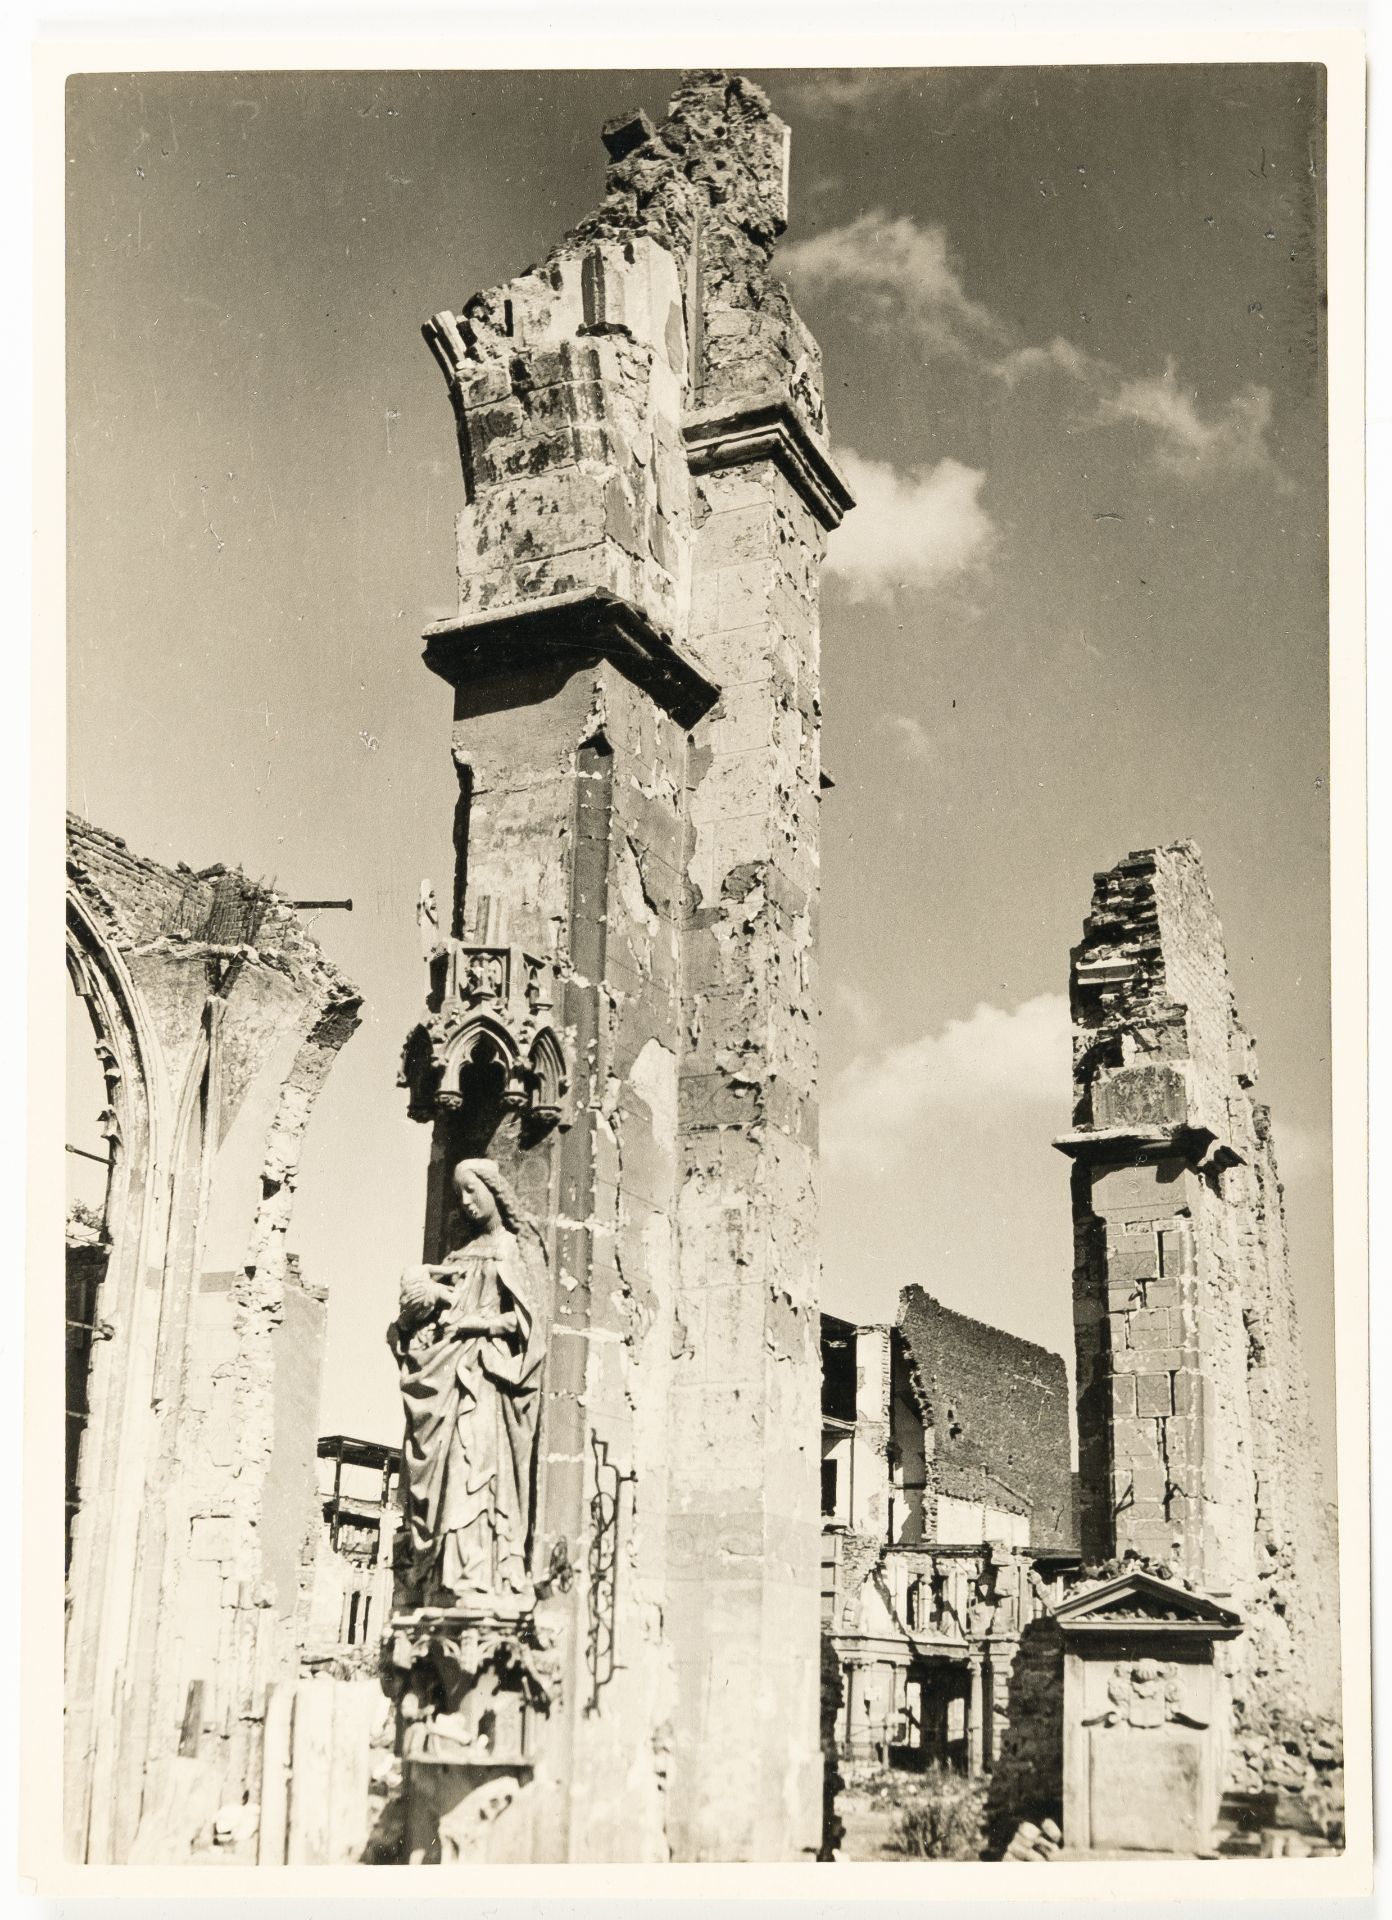 Robert Seuffert, The Virgin among the rubble.Vintage gelatin silver print on photo paper. (19)42. - Image 2 of 3